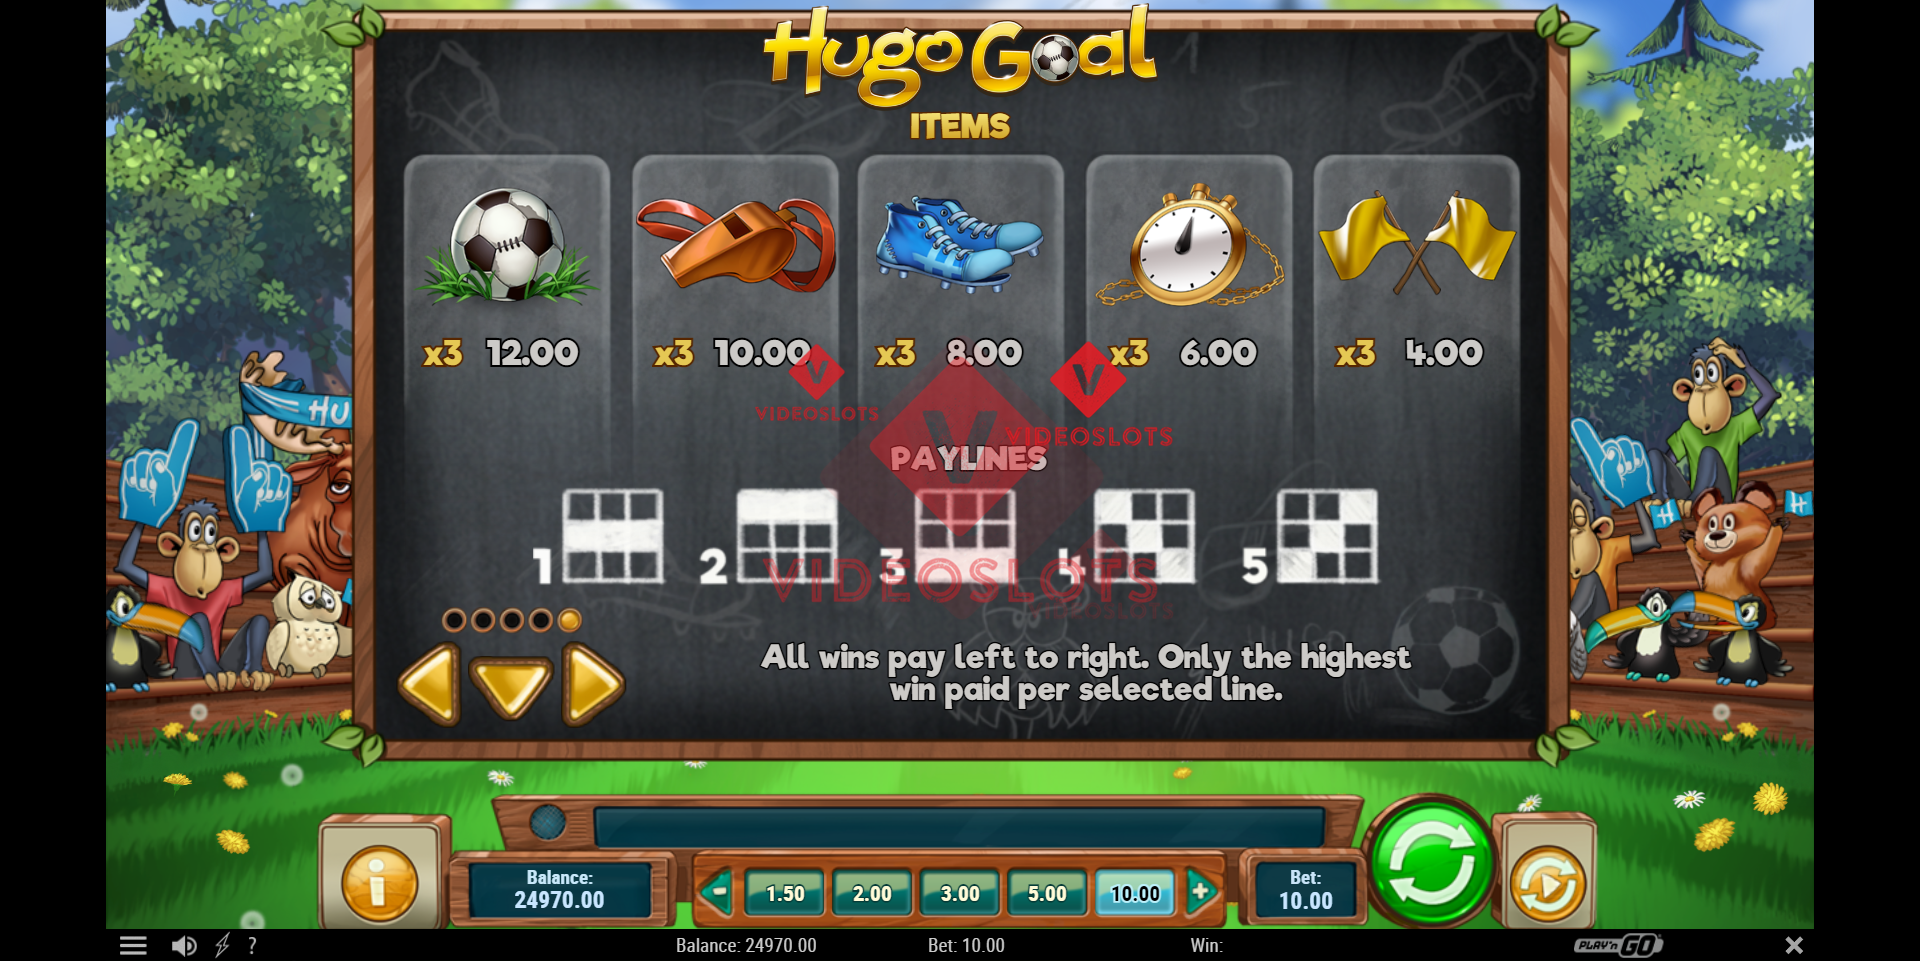 Pay Table for Hugo Goal slot from Play'n Go